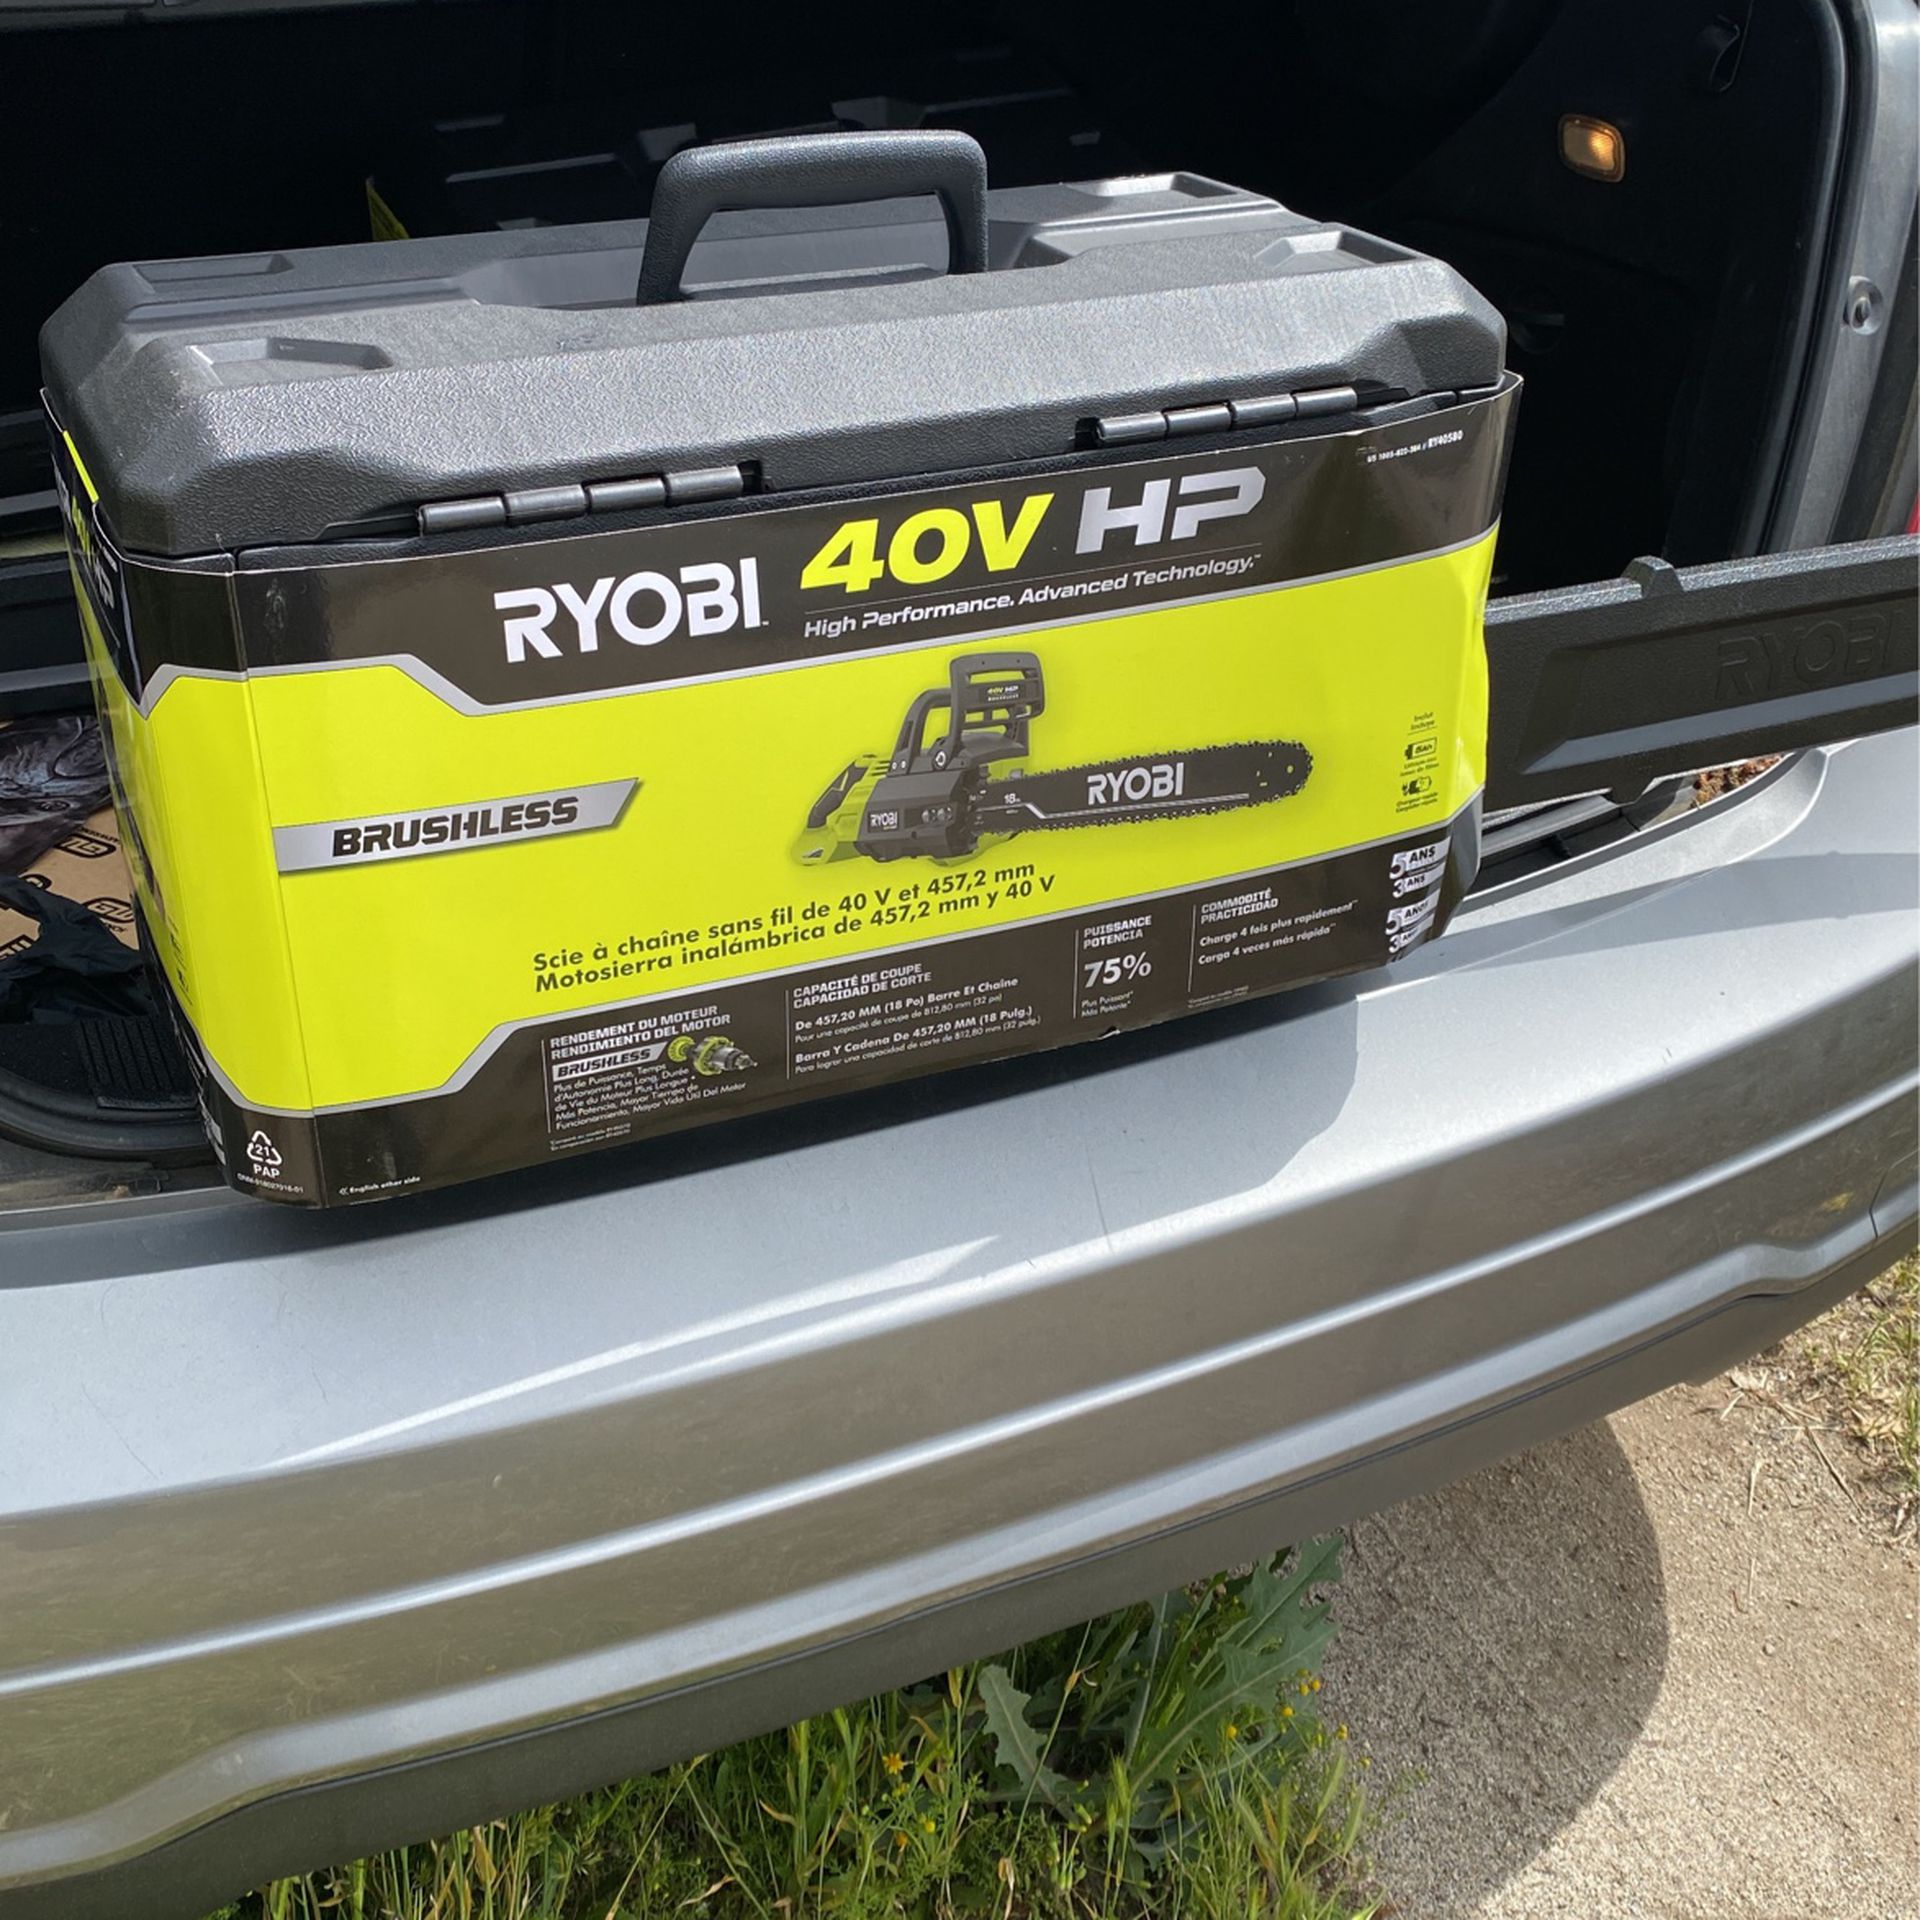 Ryobi 40v HP Brushless Cordless Chainsaw Kit